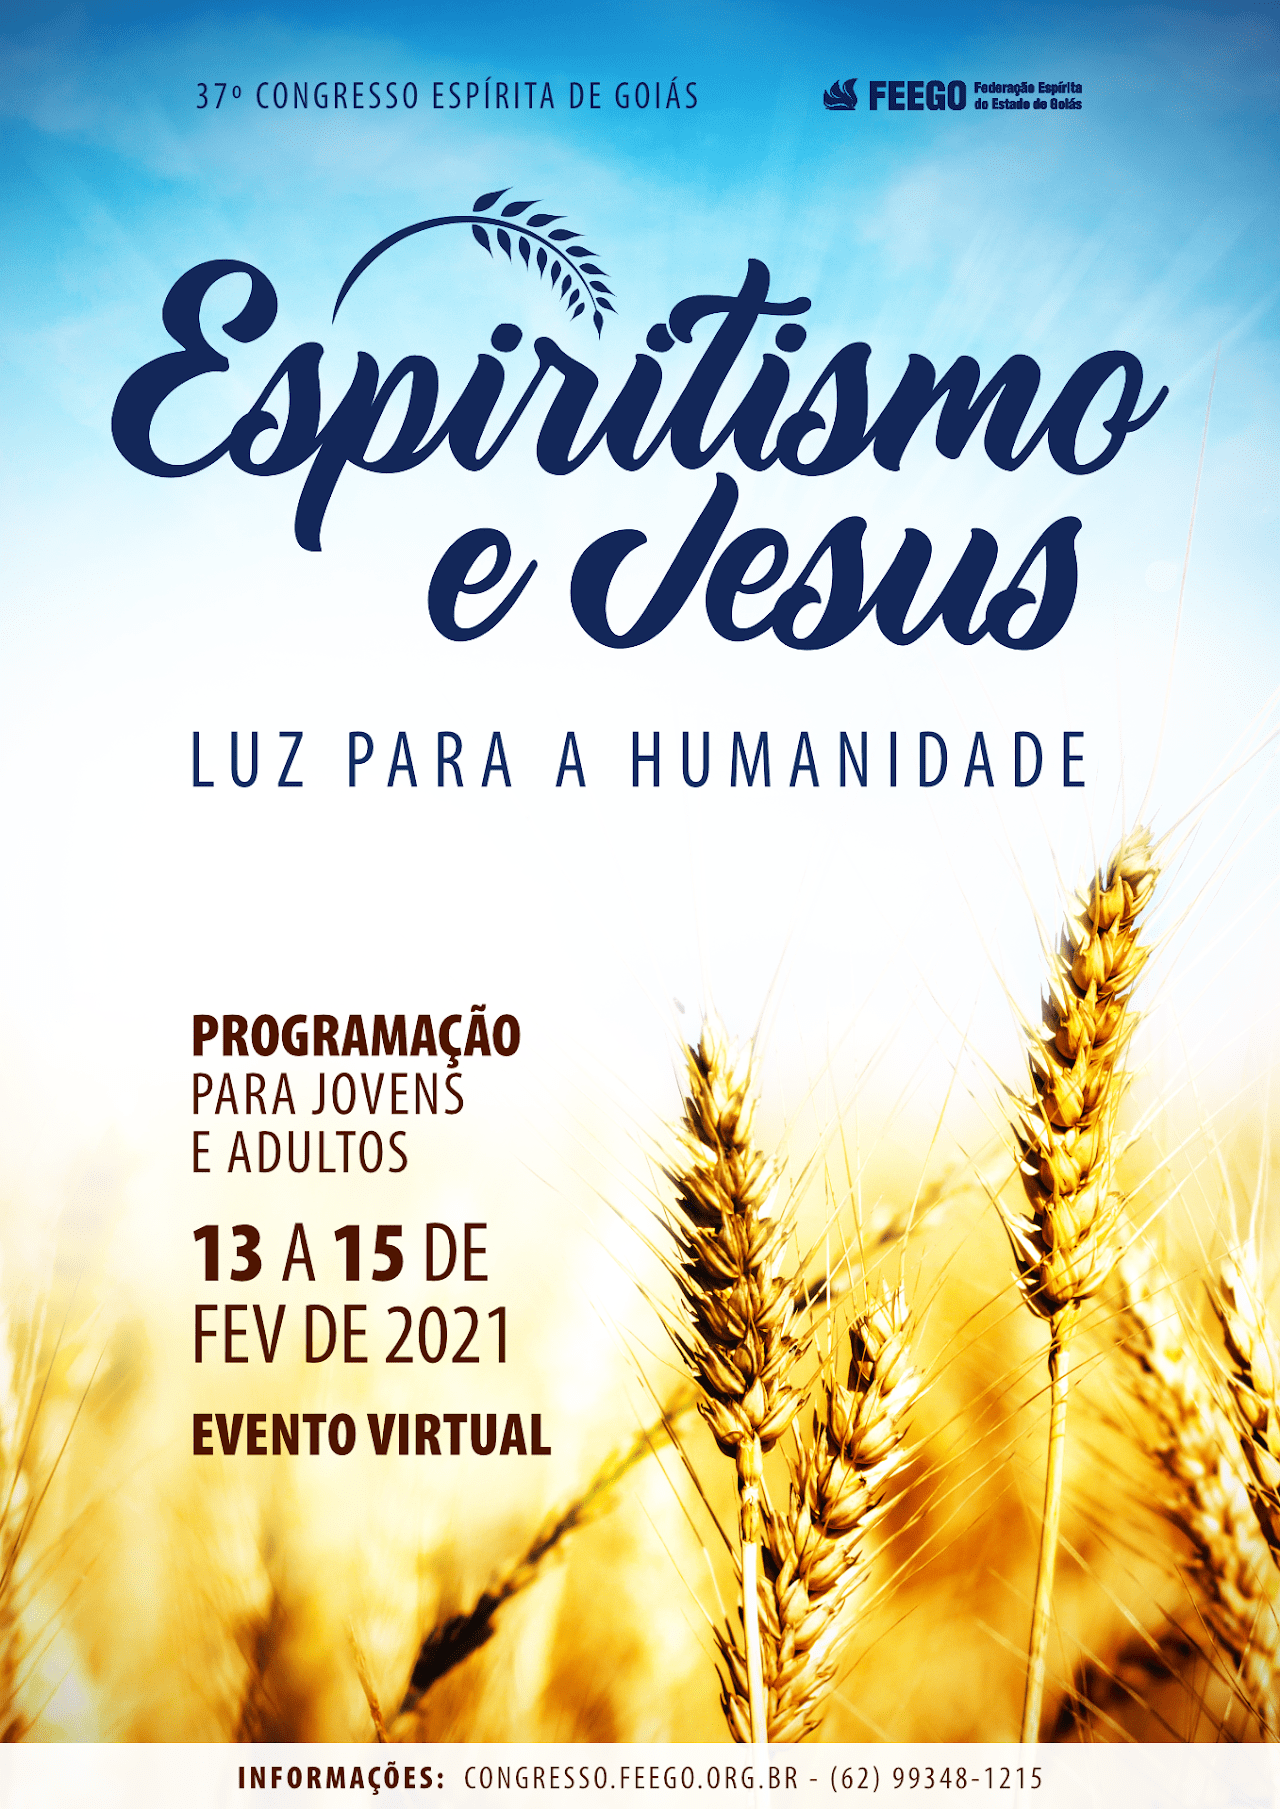 37⁰ Congresso Espírita de Goiás